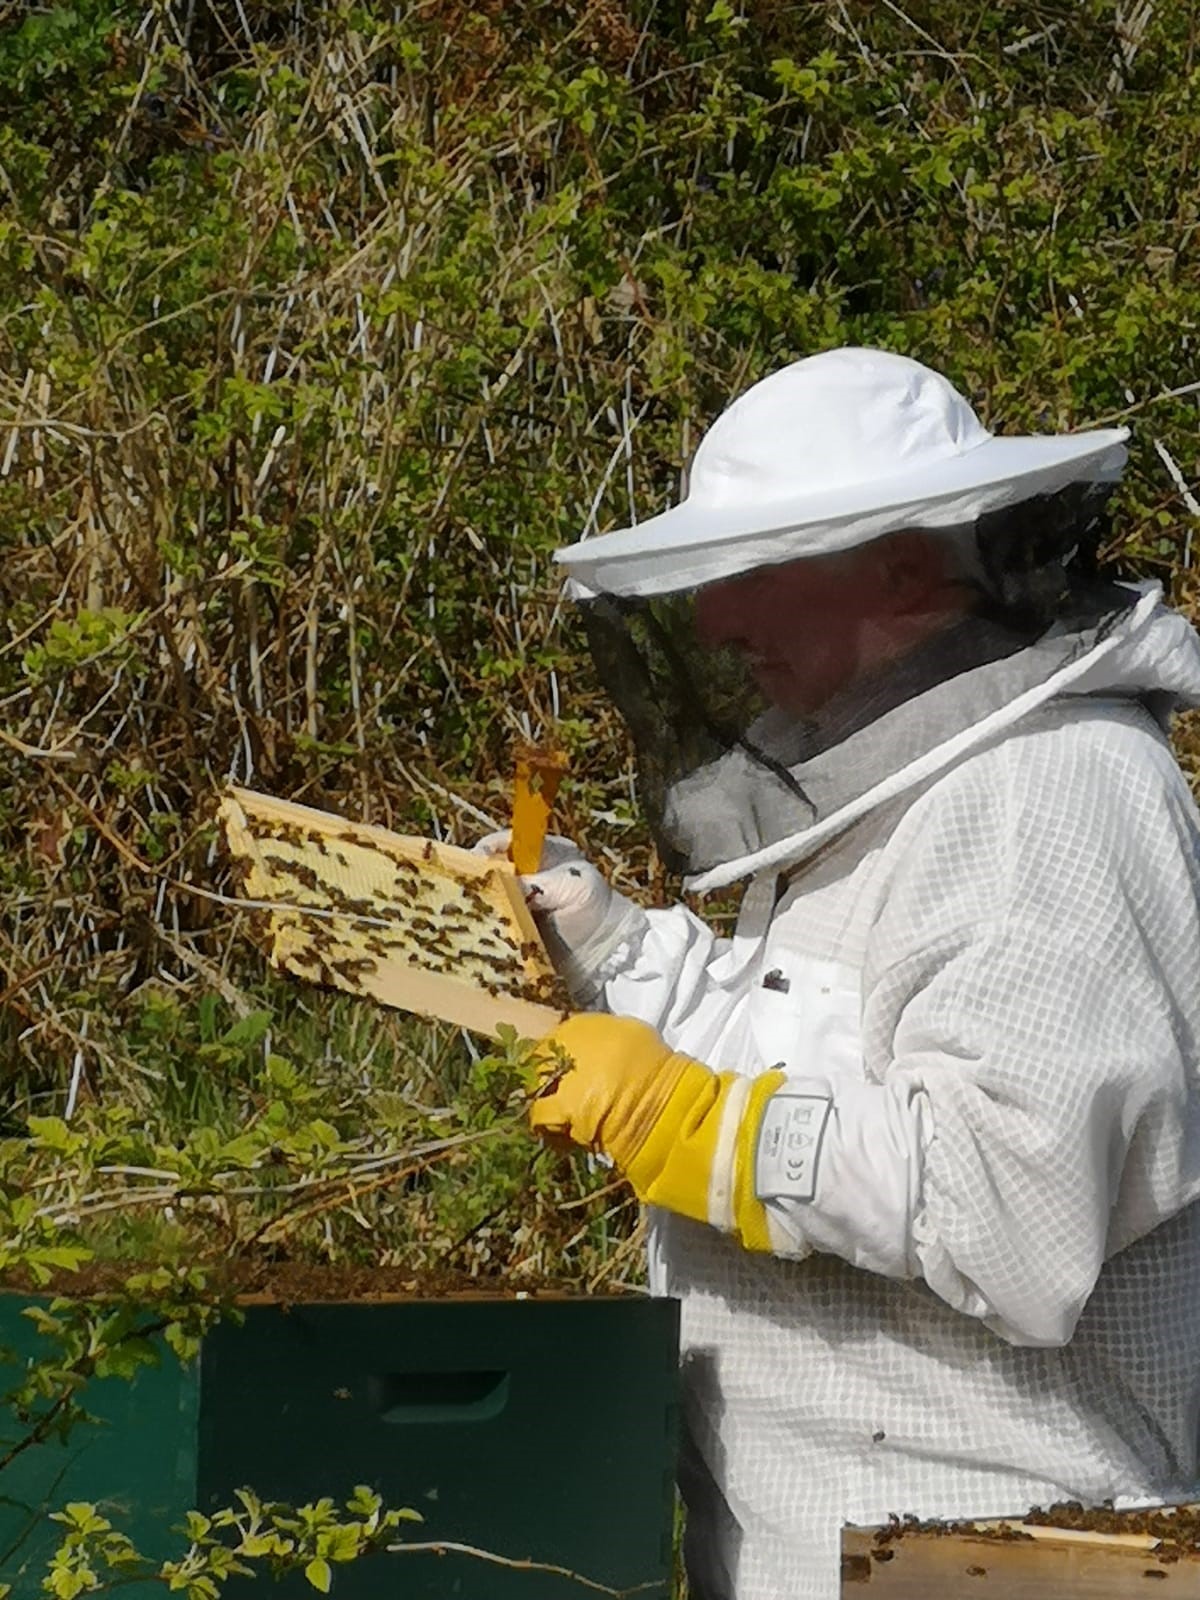 Castlebank beekeeper